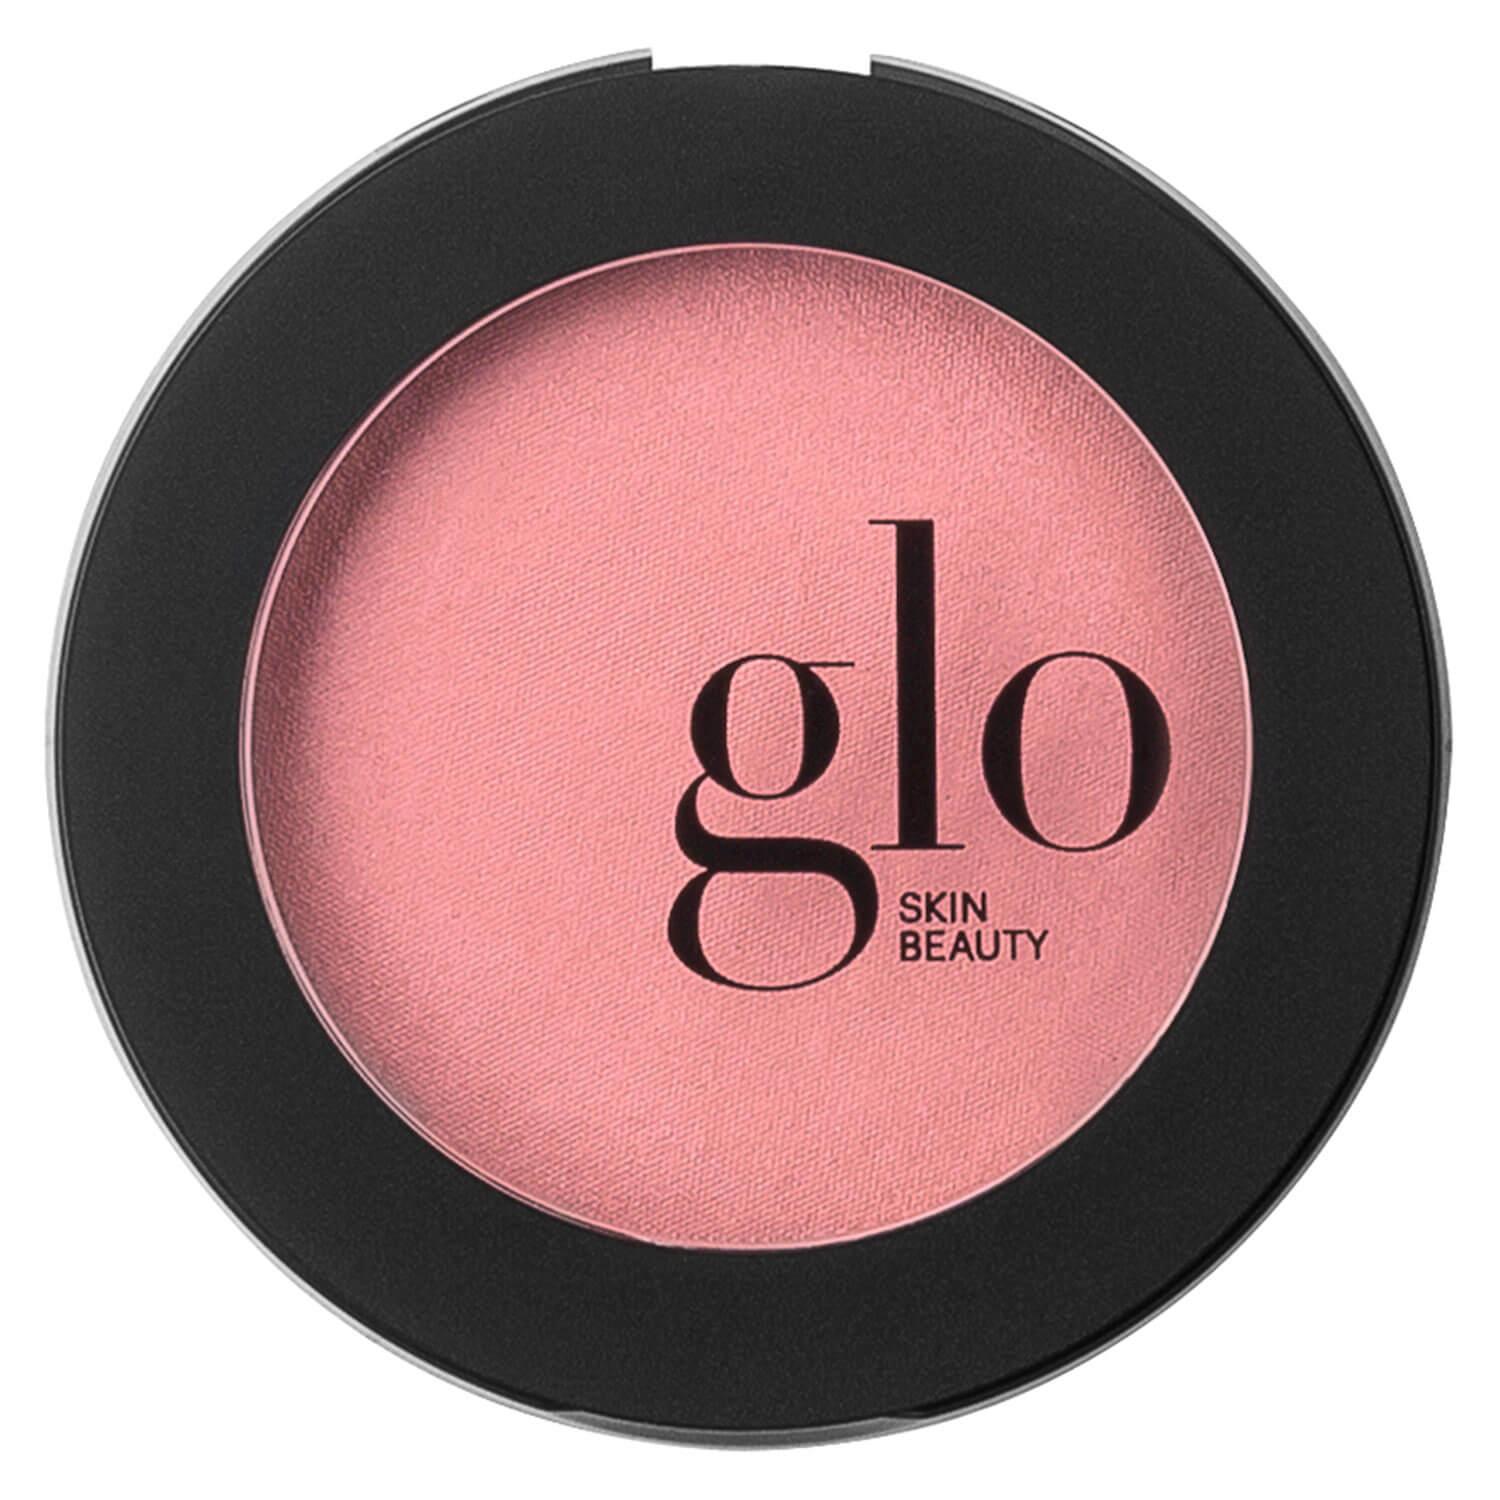 Glo Skin Beauty Blush - Blush Flowerchild